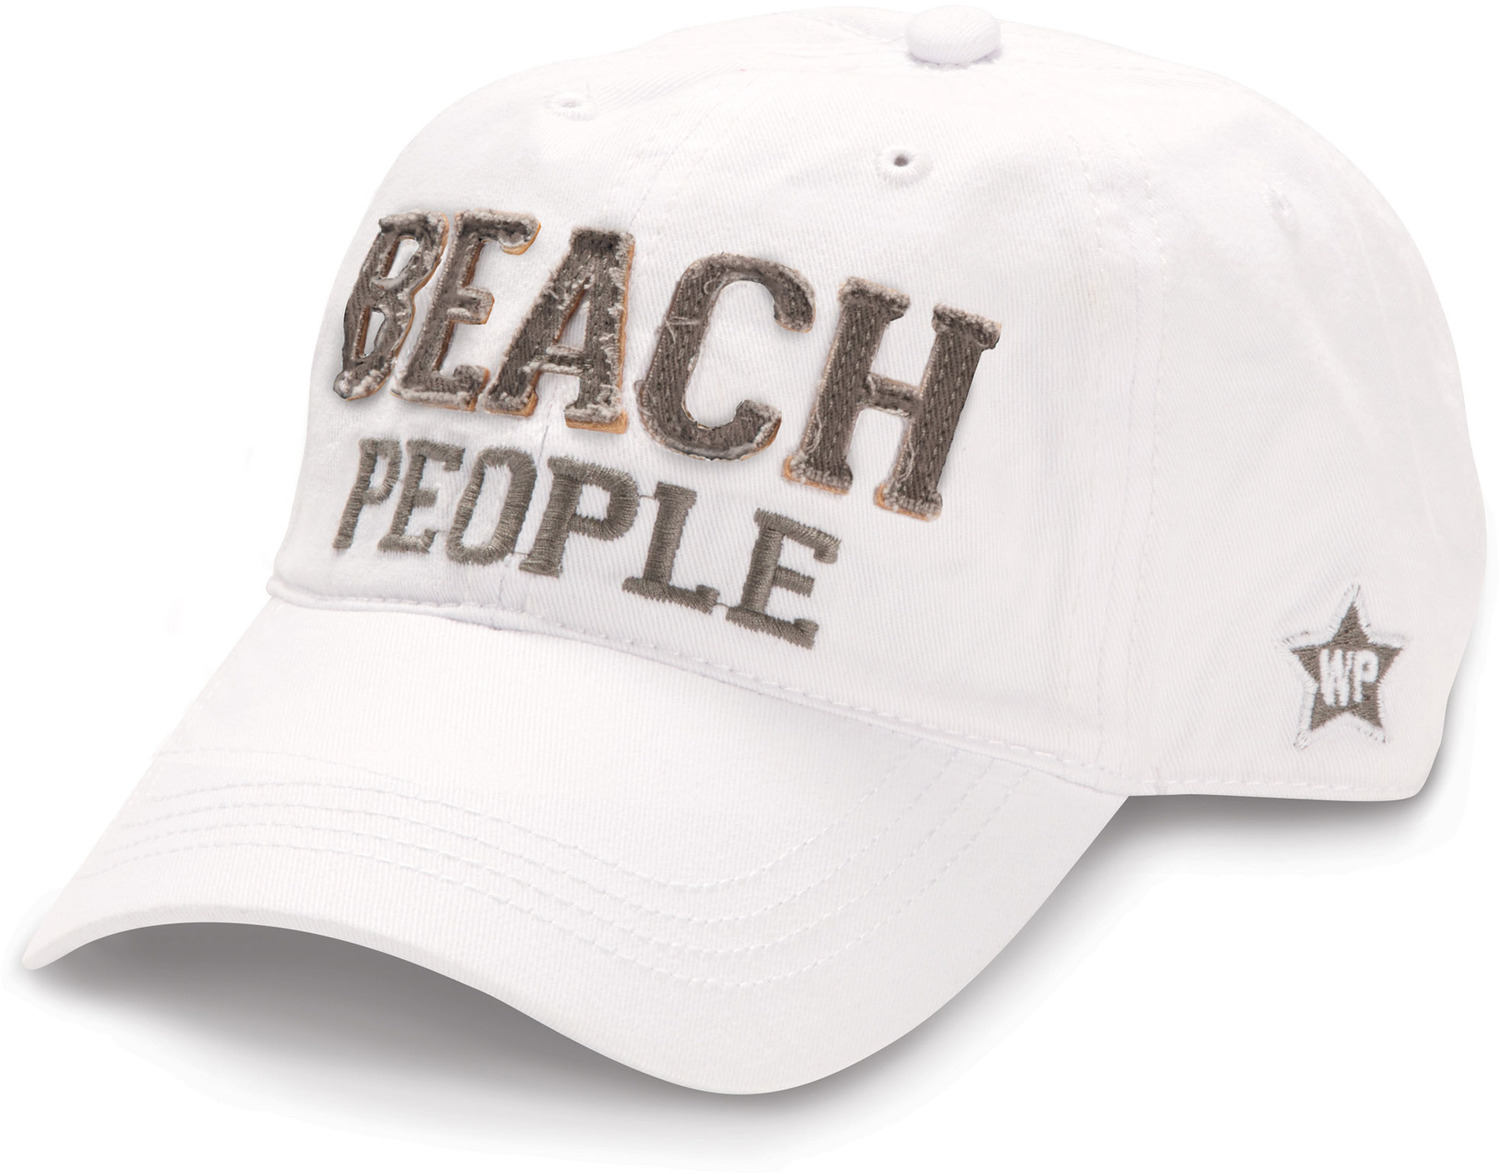 Beach People by We People - White Unisex Adjustable Beach Hat